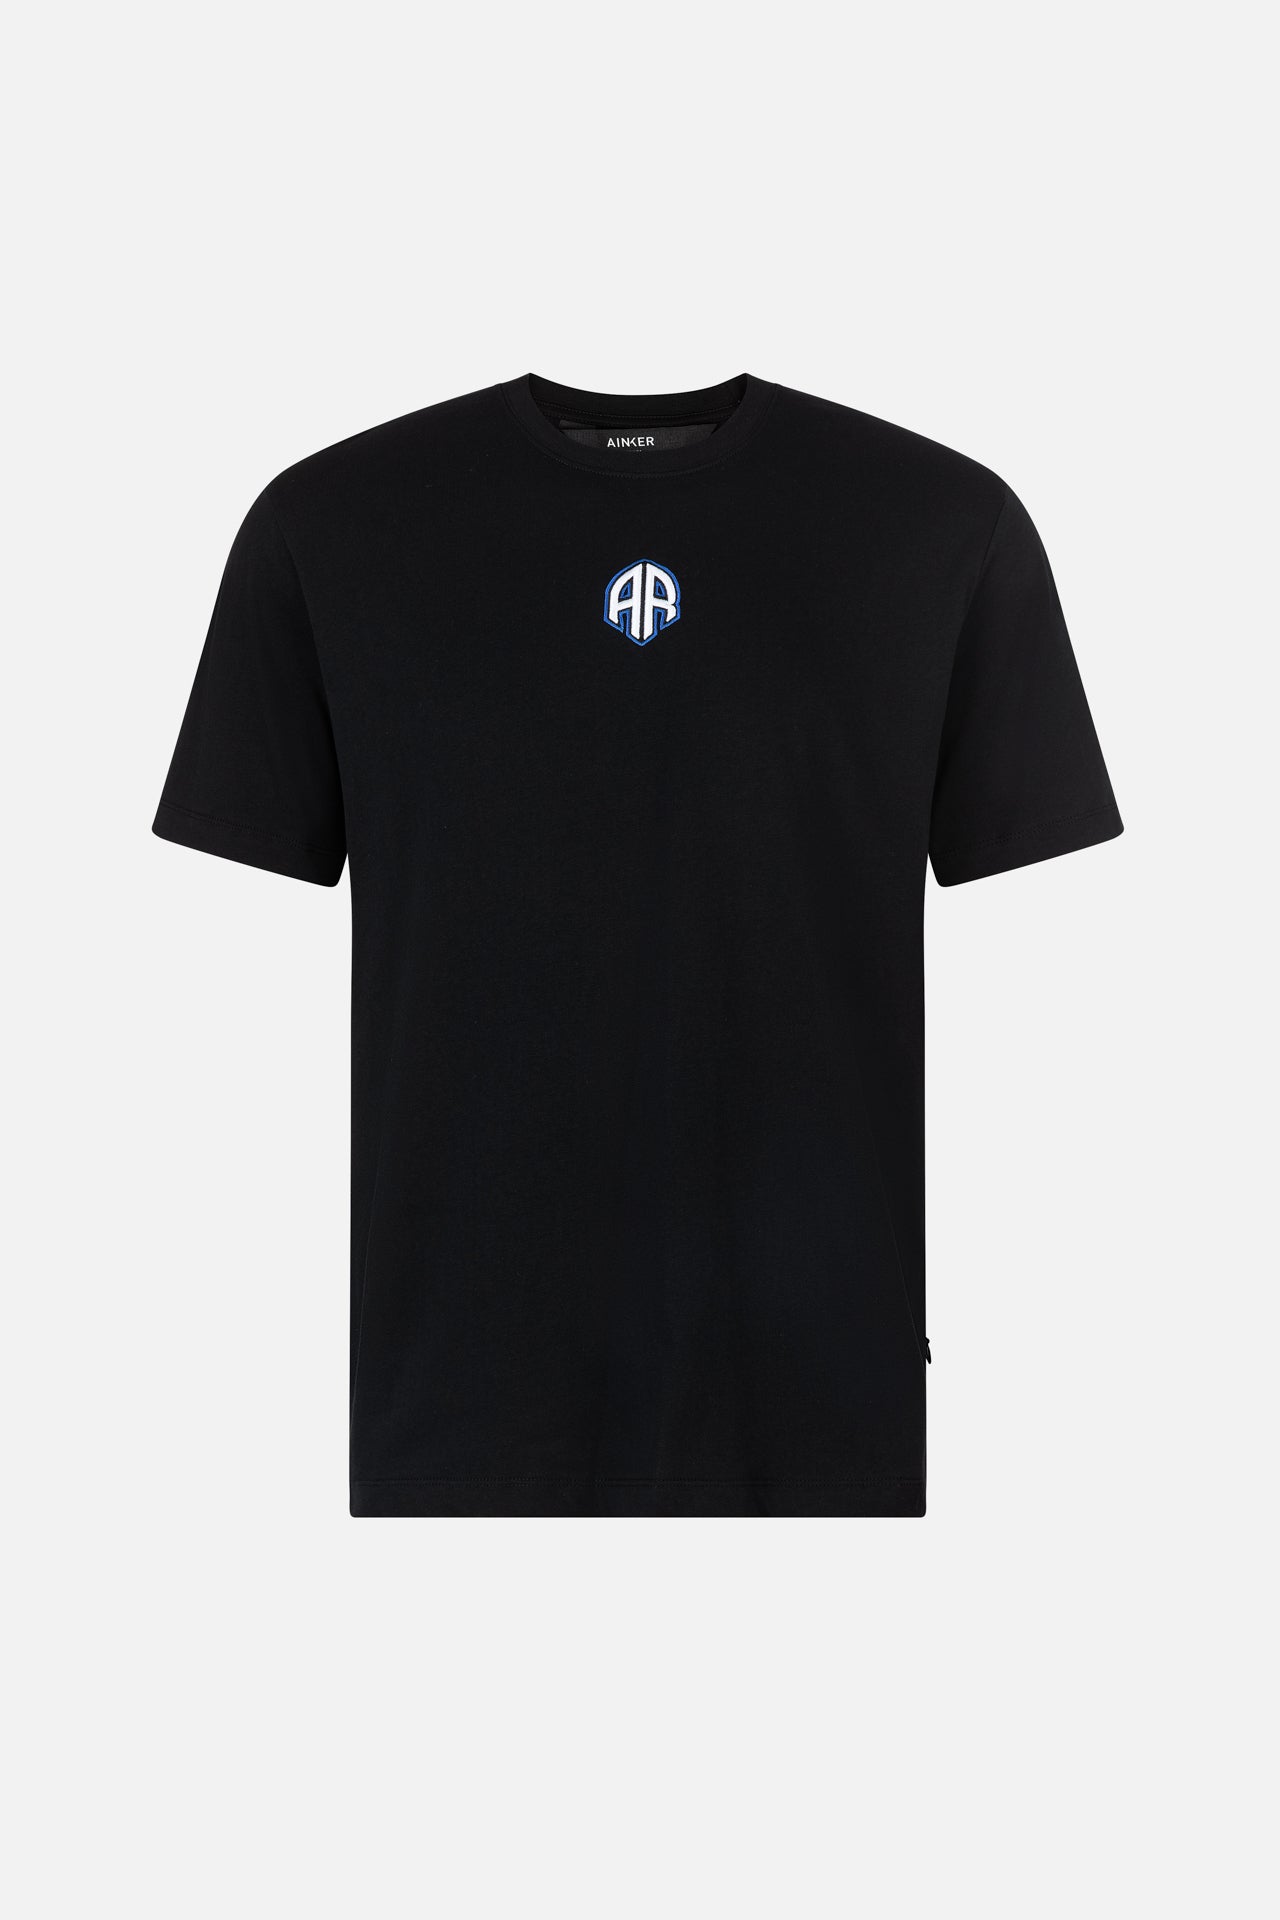 Football Black T-Shirt